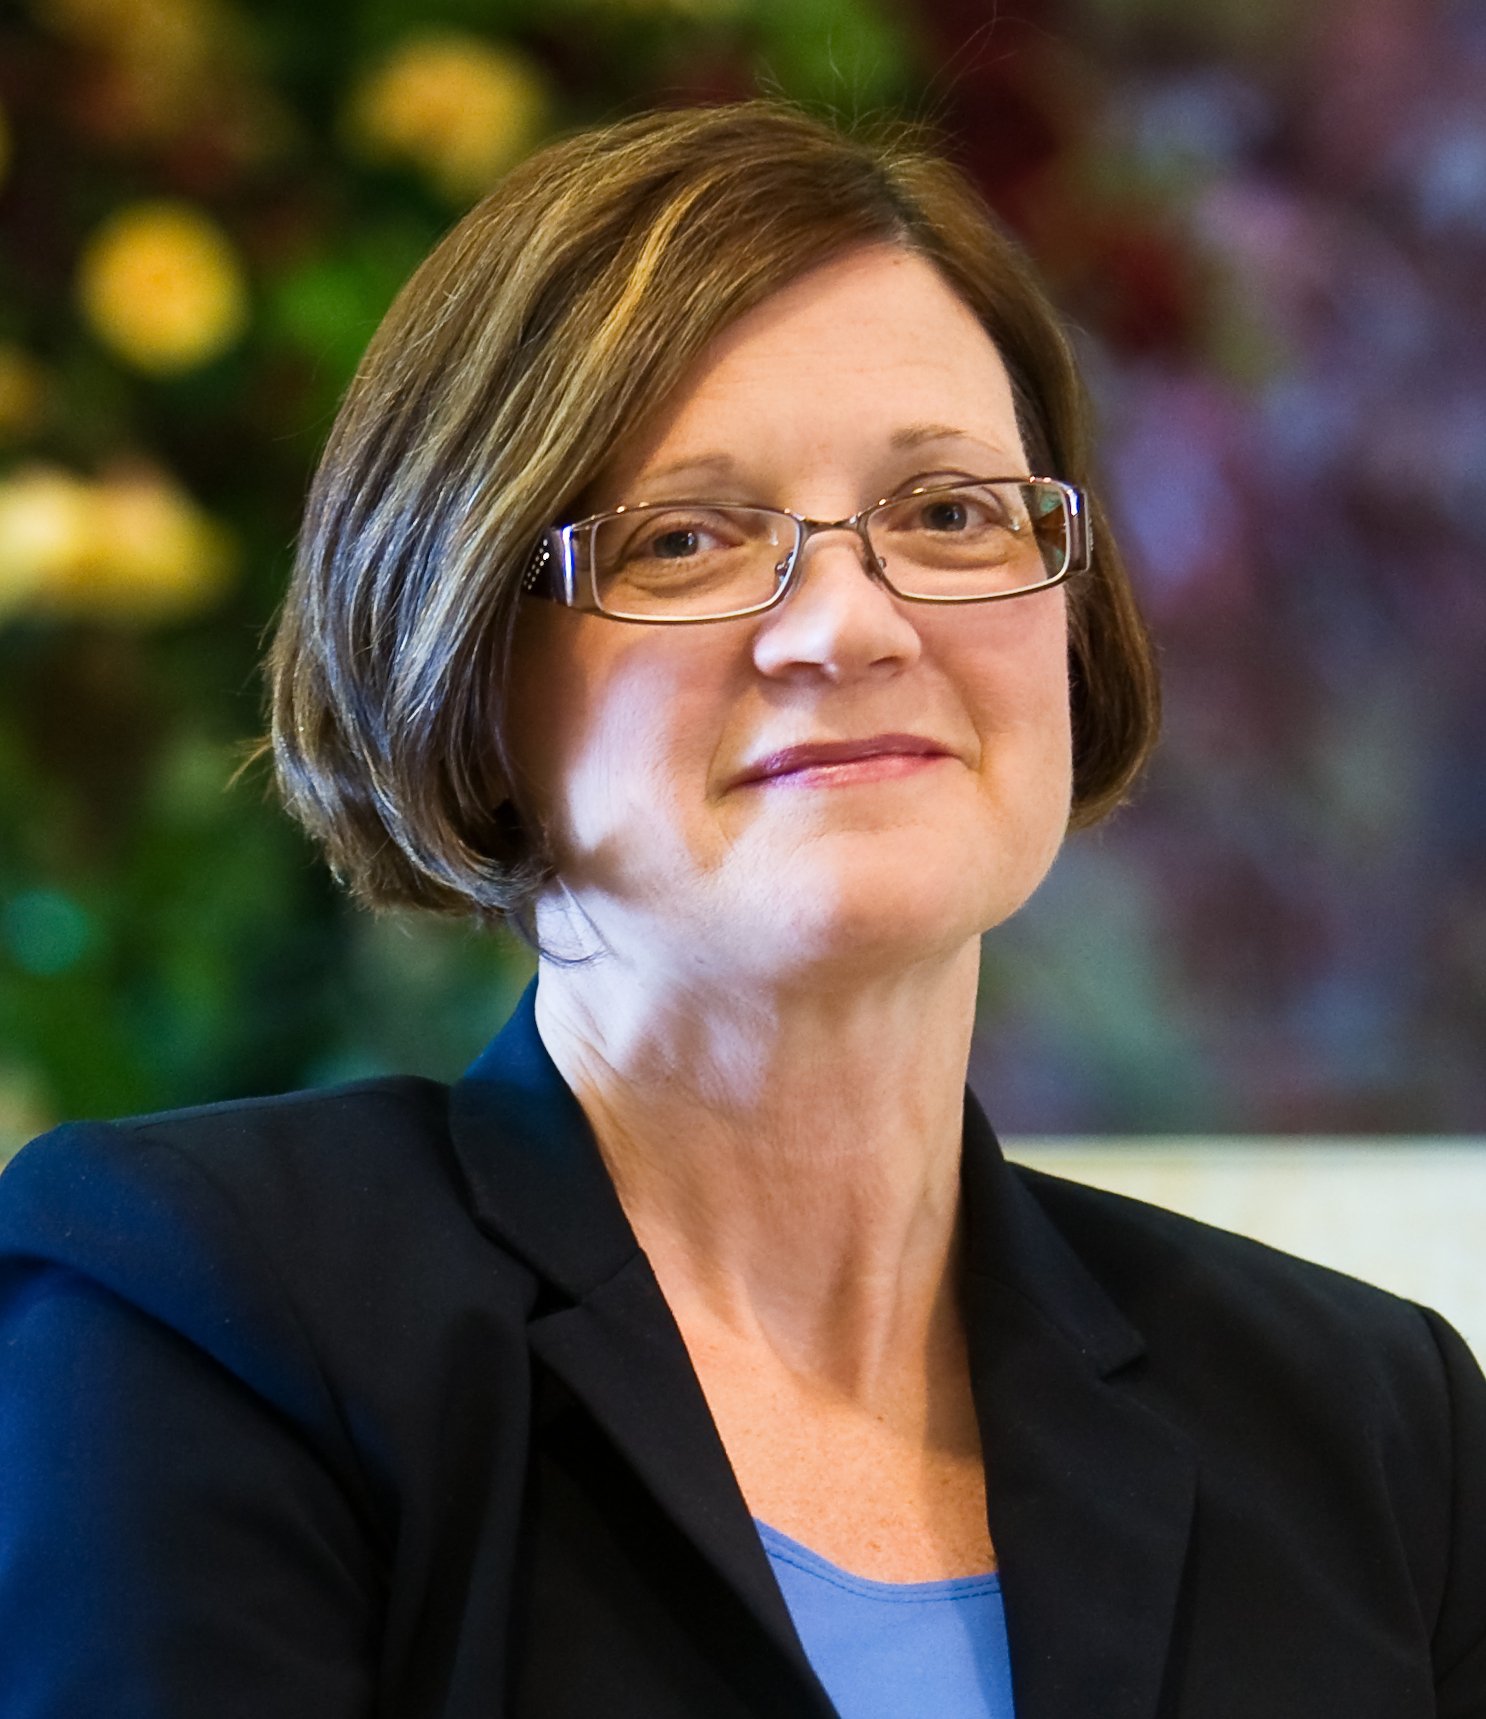 Dr. Liz R. Scott, CEO